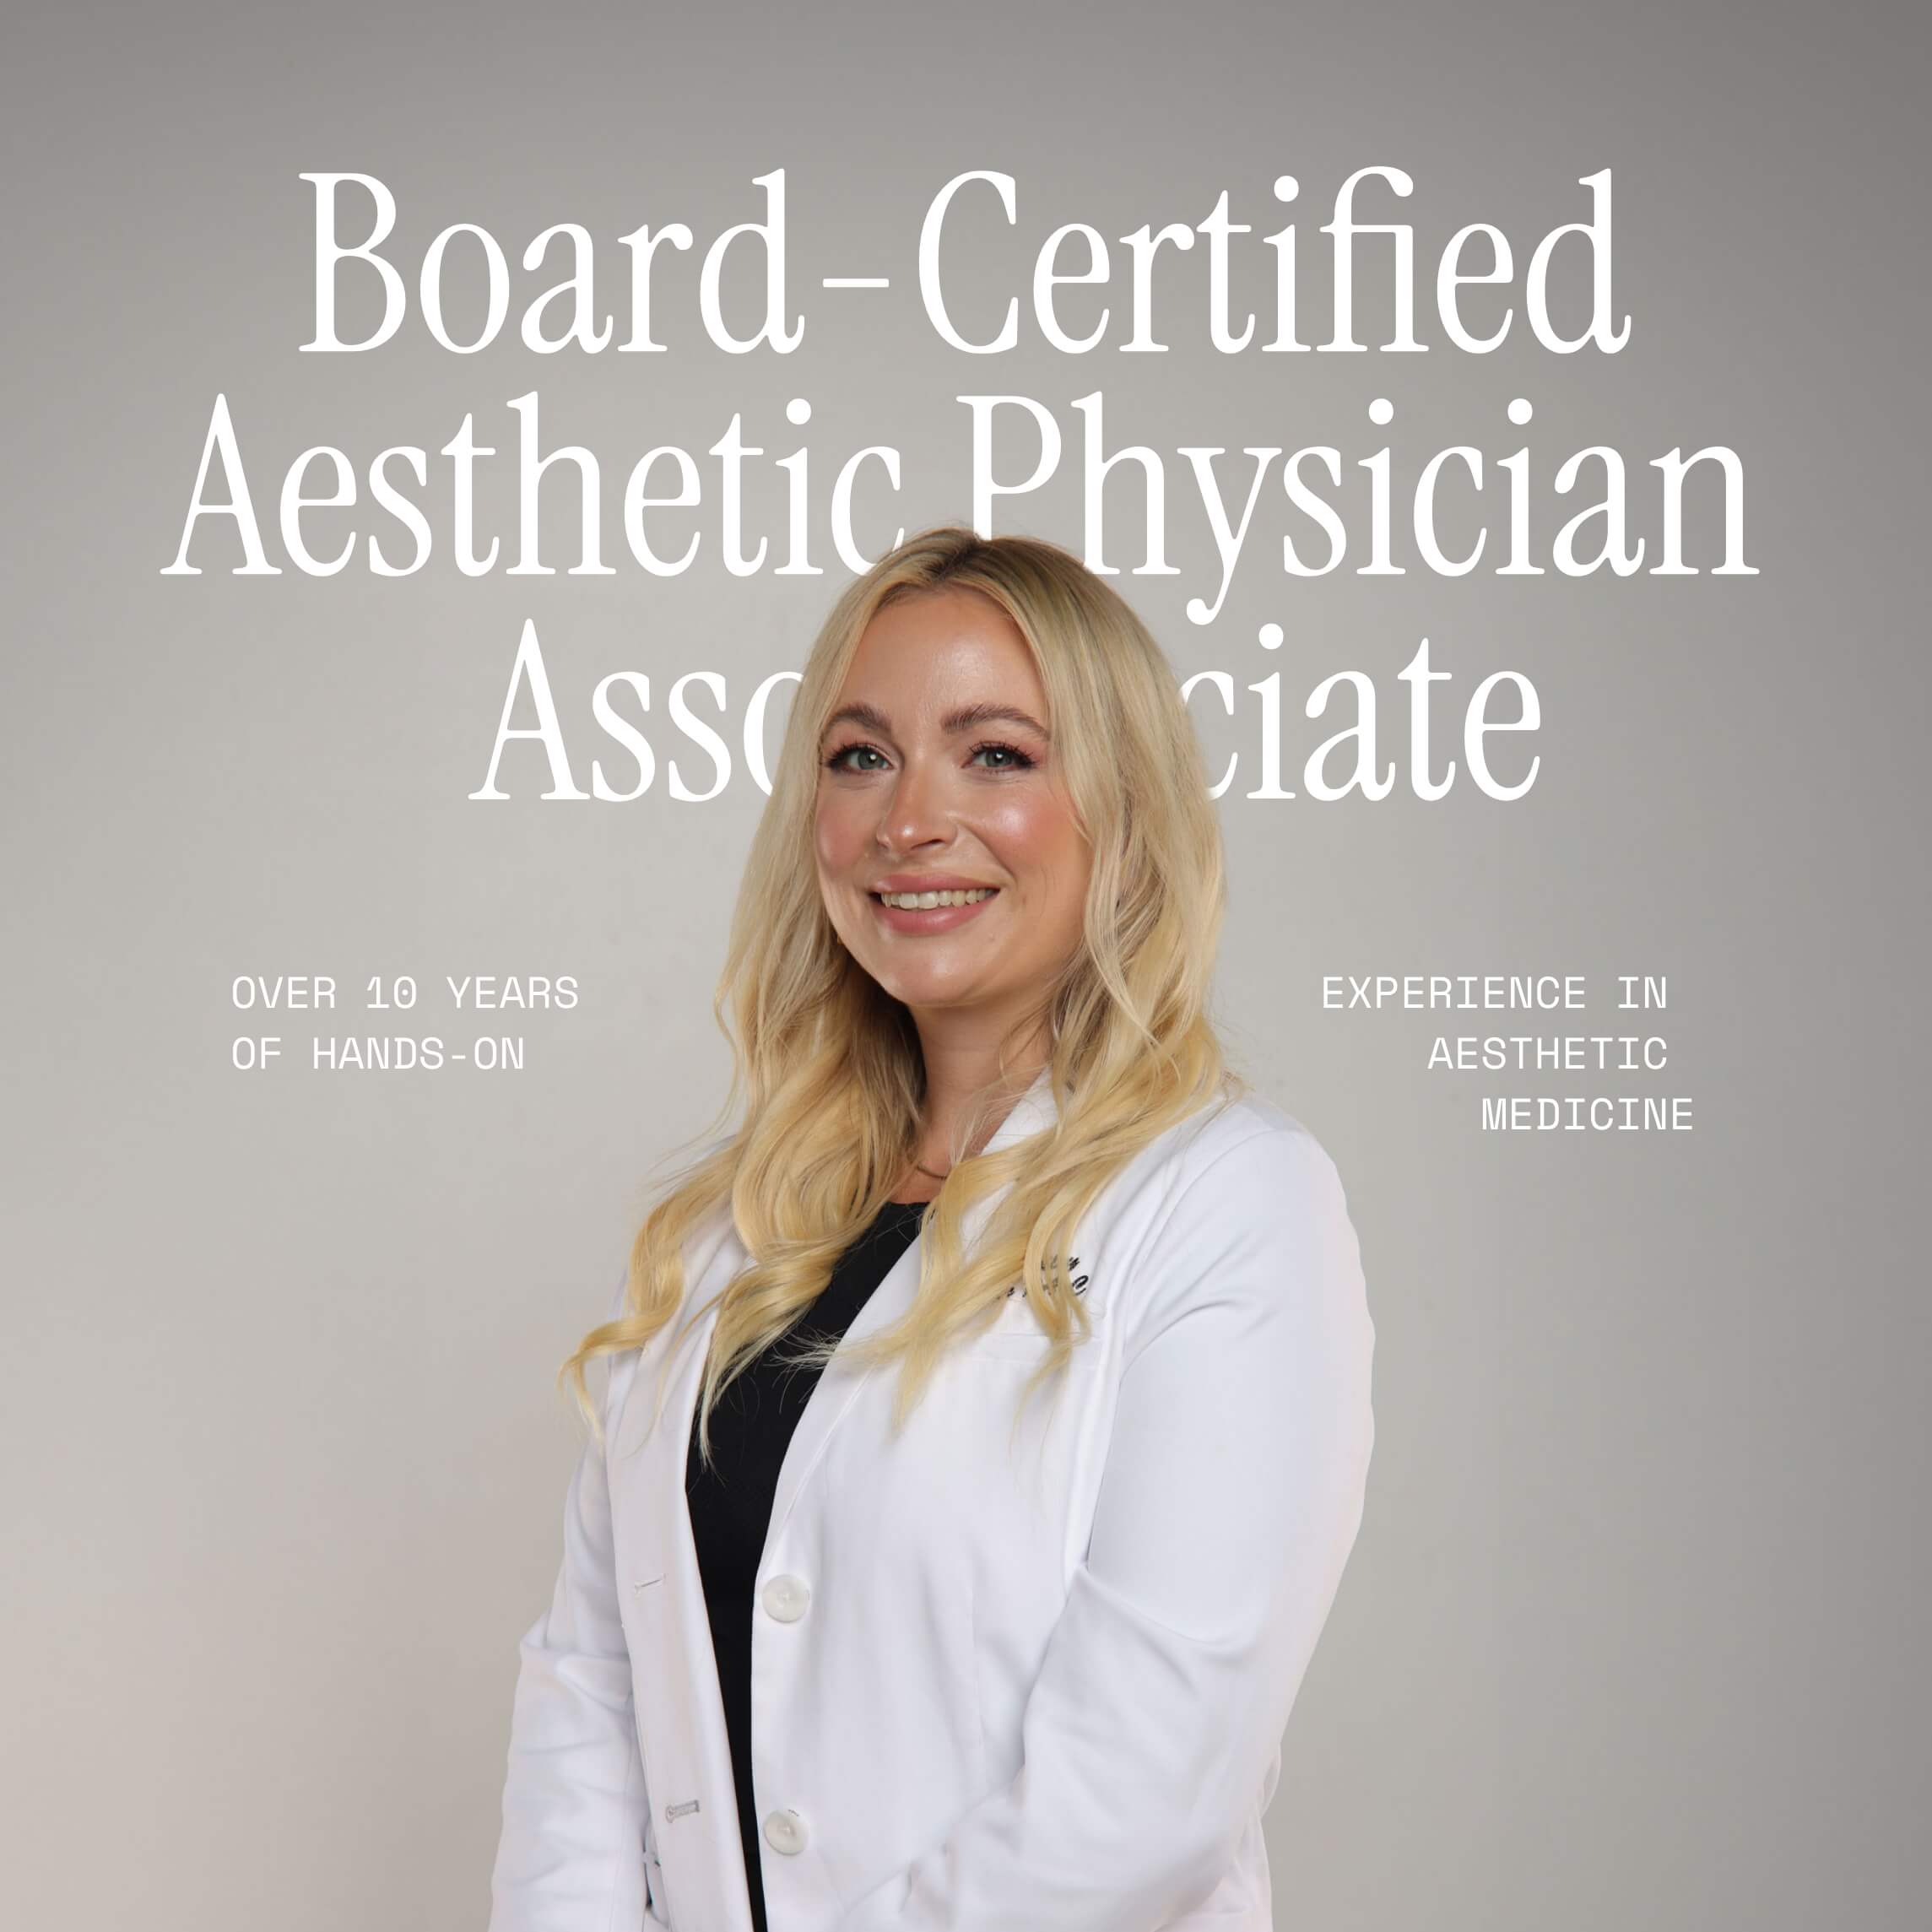 Molly Bailey, board-certified aesthetic physician associate